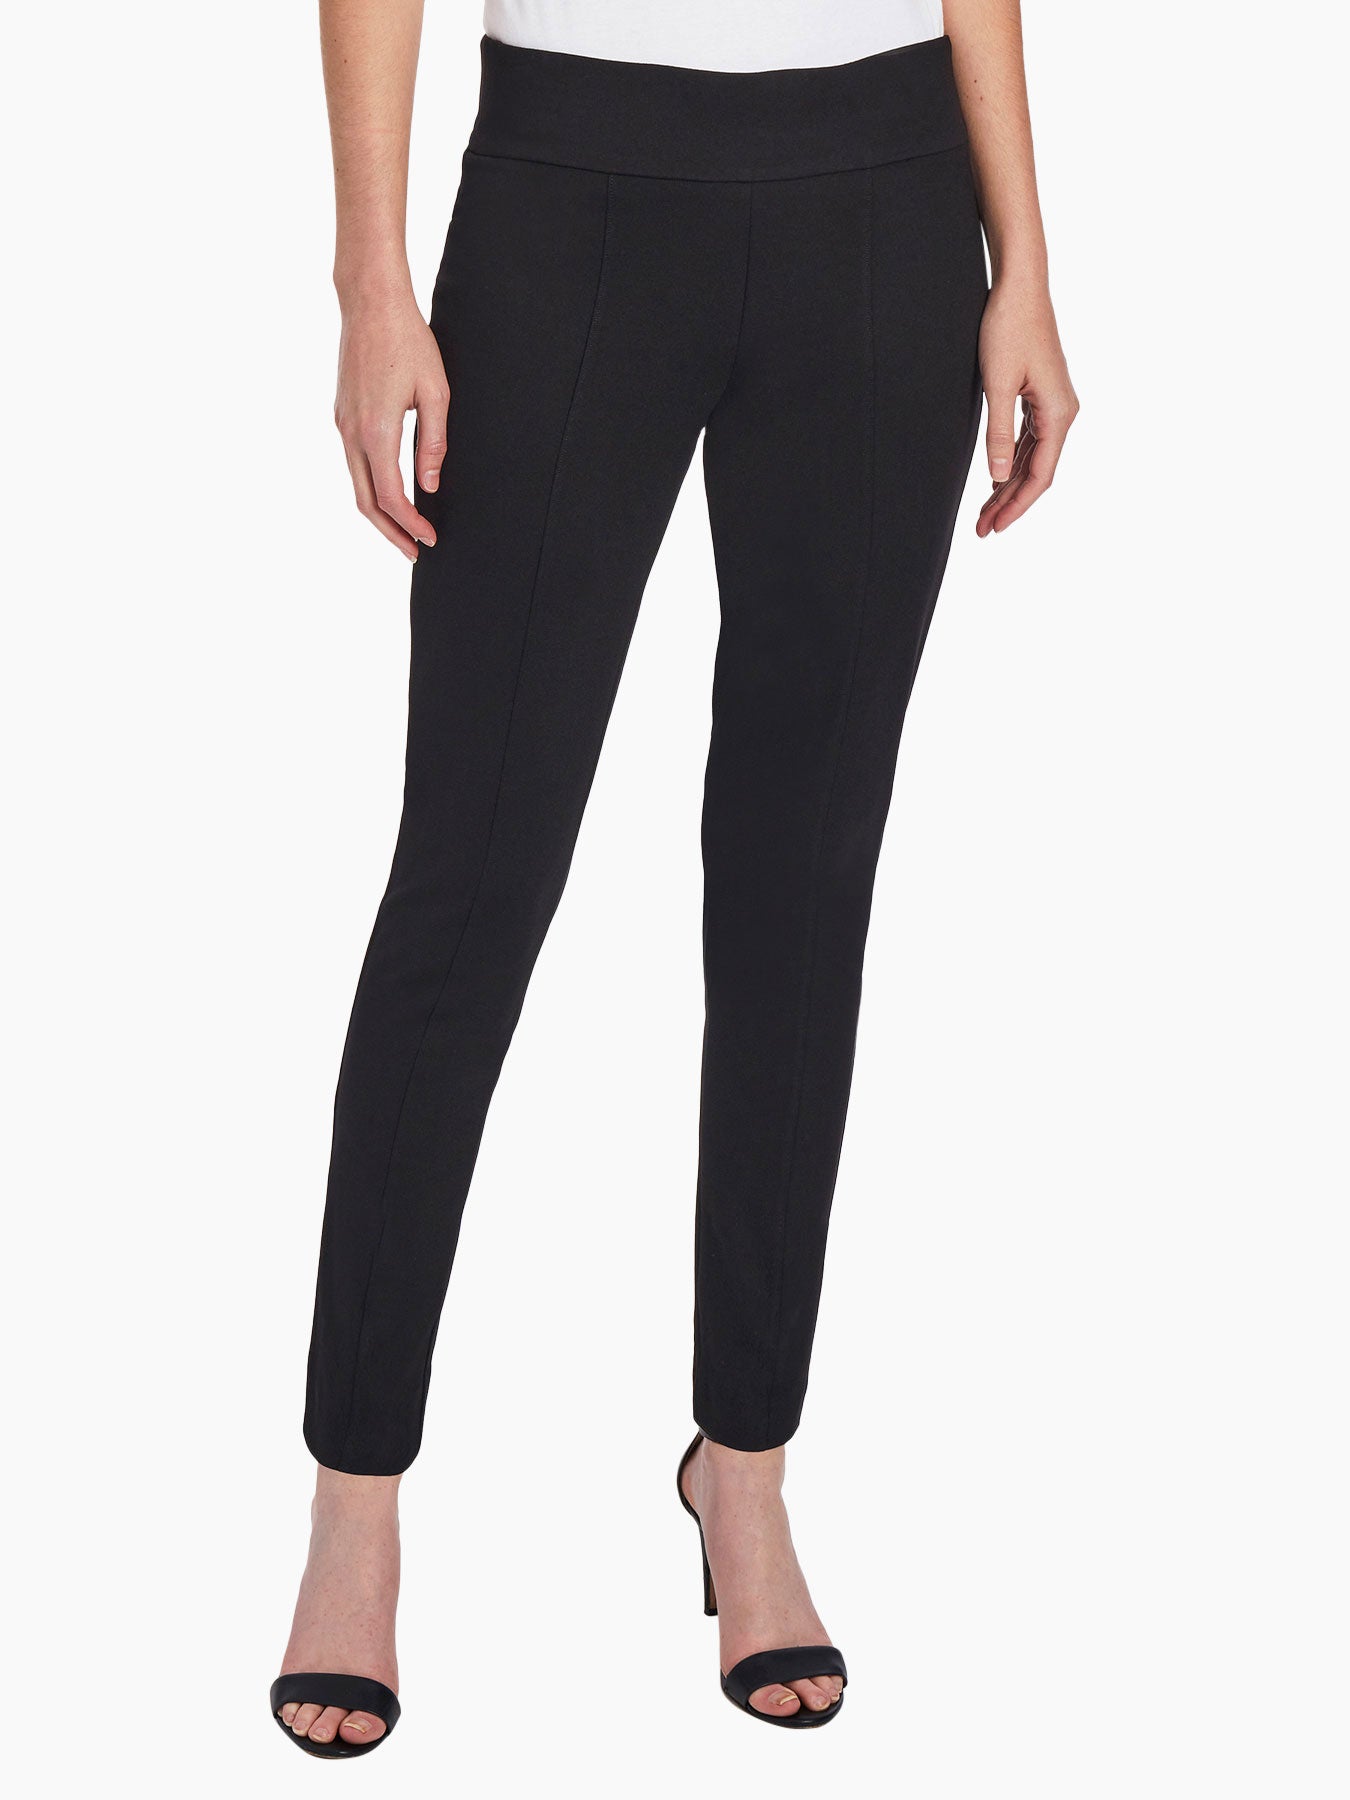 Brilliant Basics Women's Short Length Skinny Work Pant - Black - Size 8